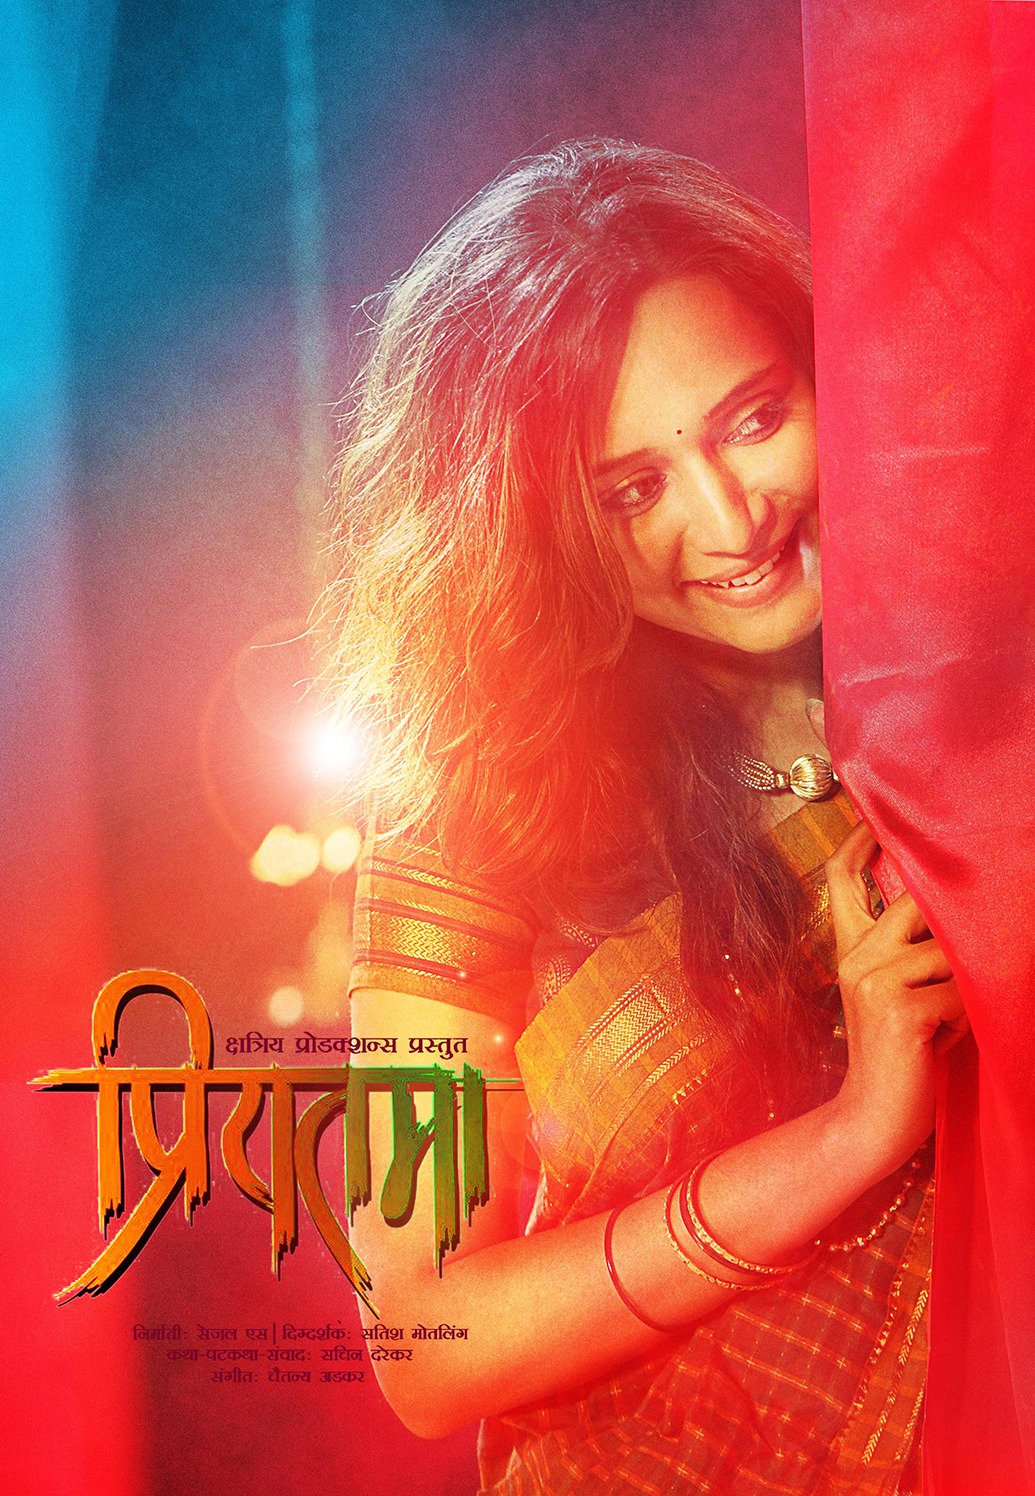 Extra Large Movie Poster Image for Priyatama (#8 of 9)